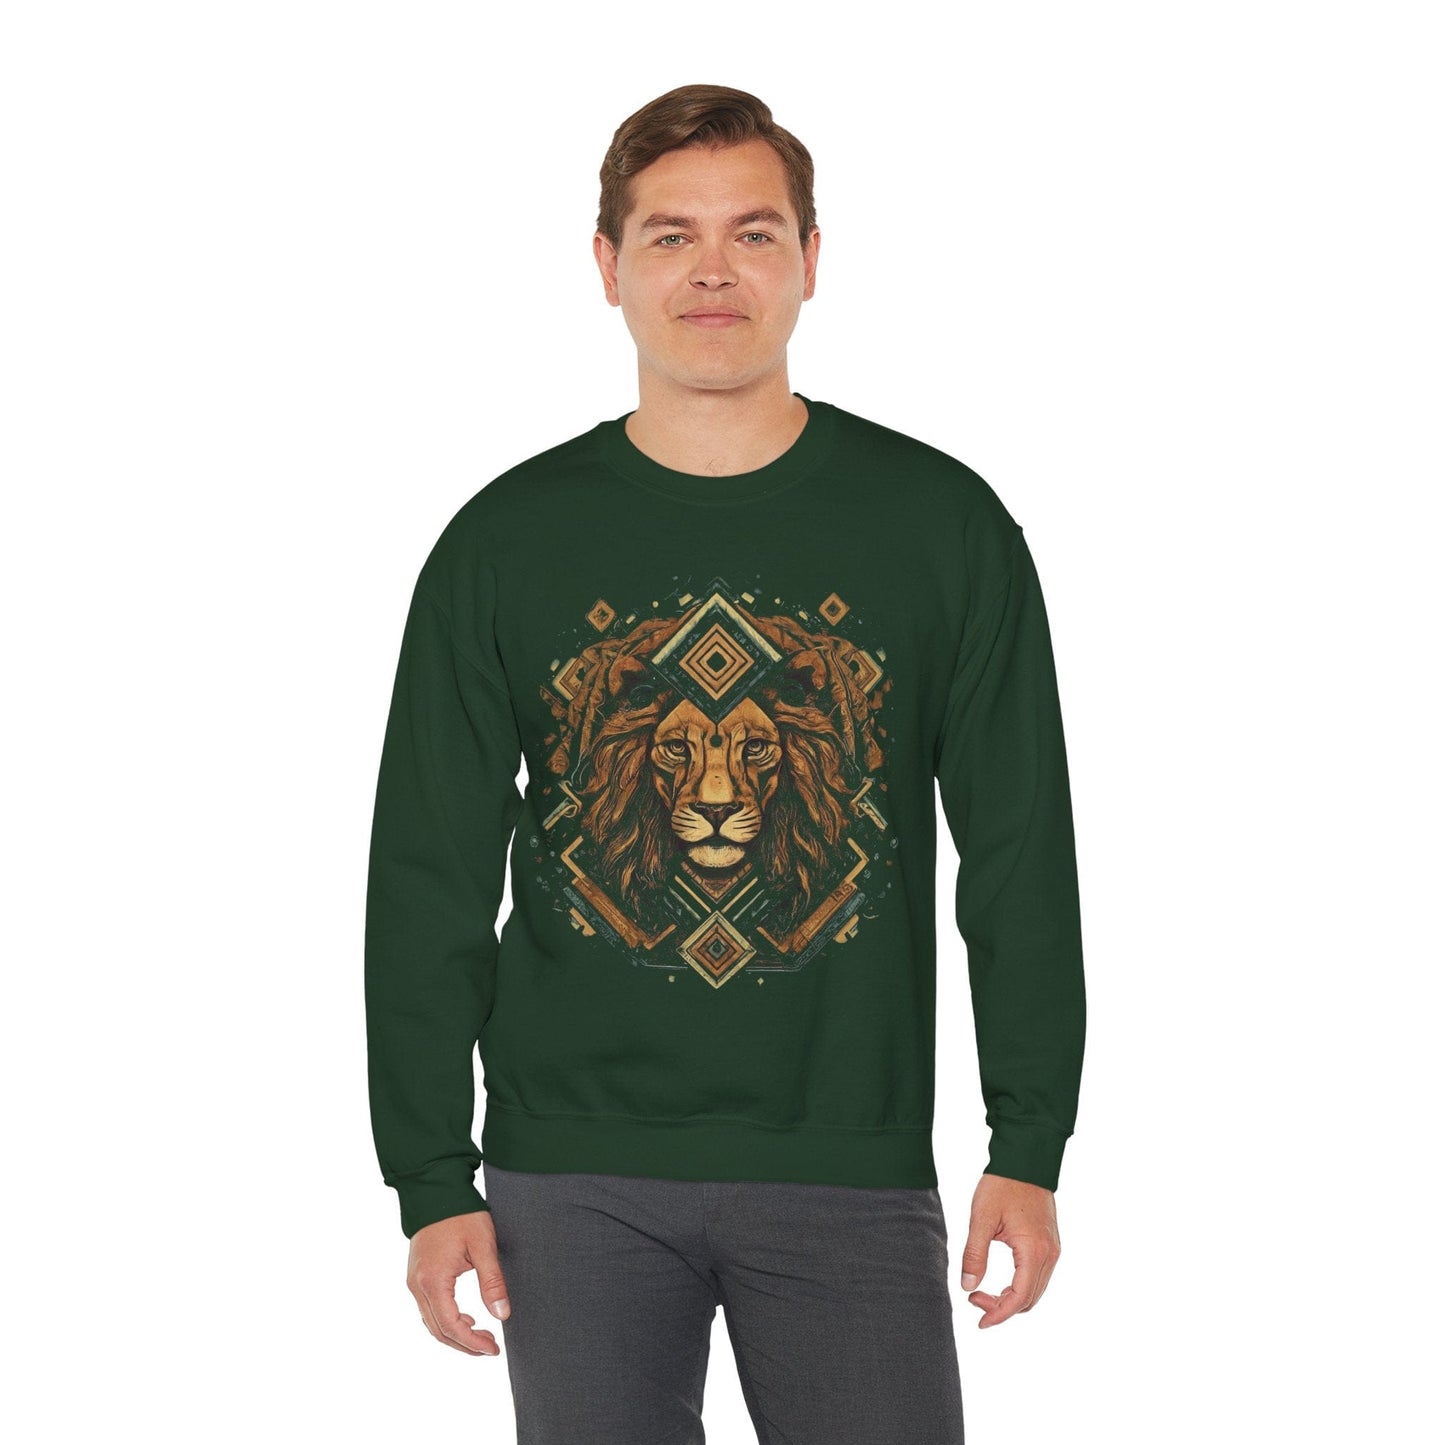 Sweatshirt Neo-traditional Leo Soft Crewneck Sweatshirt